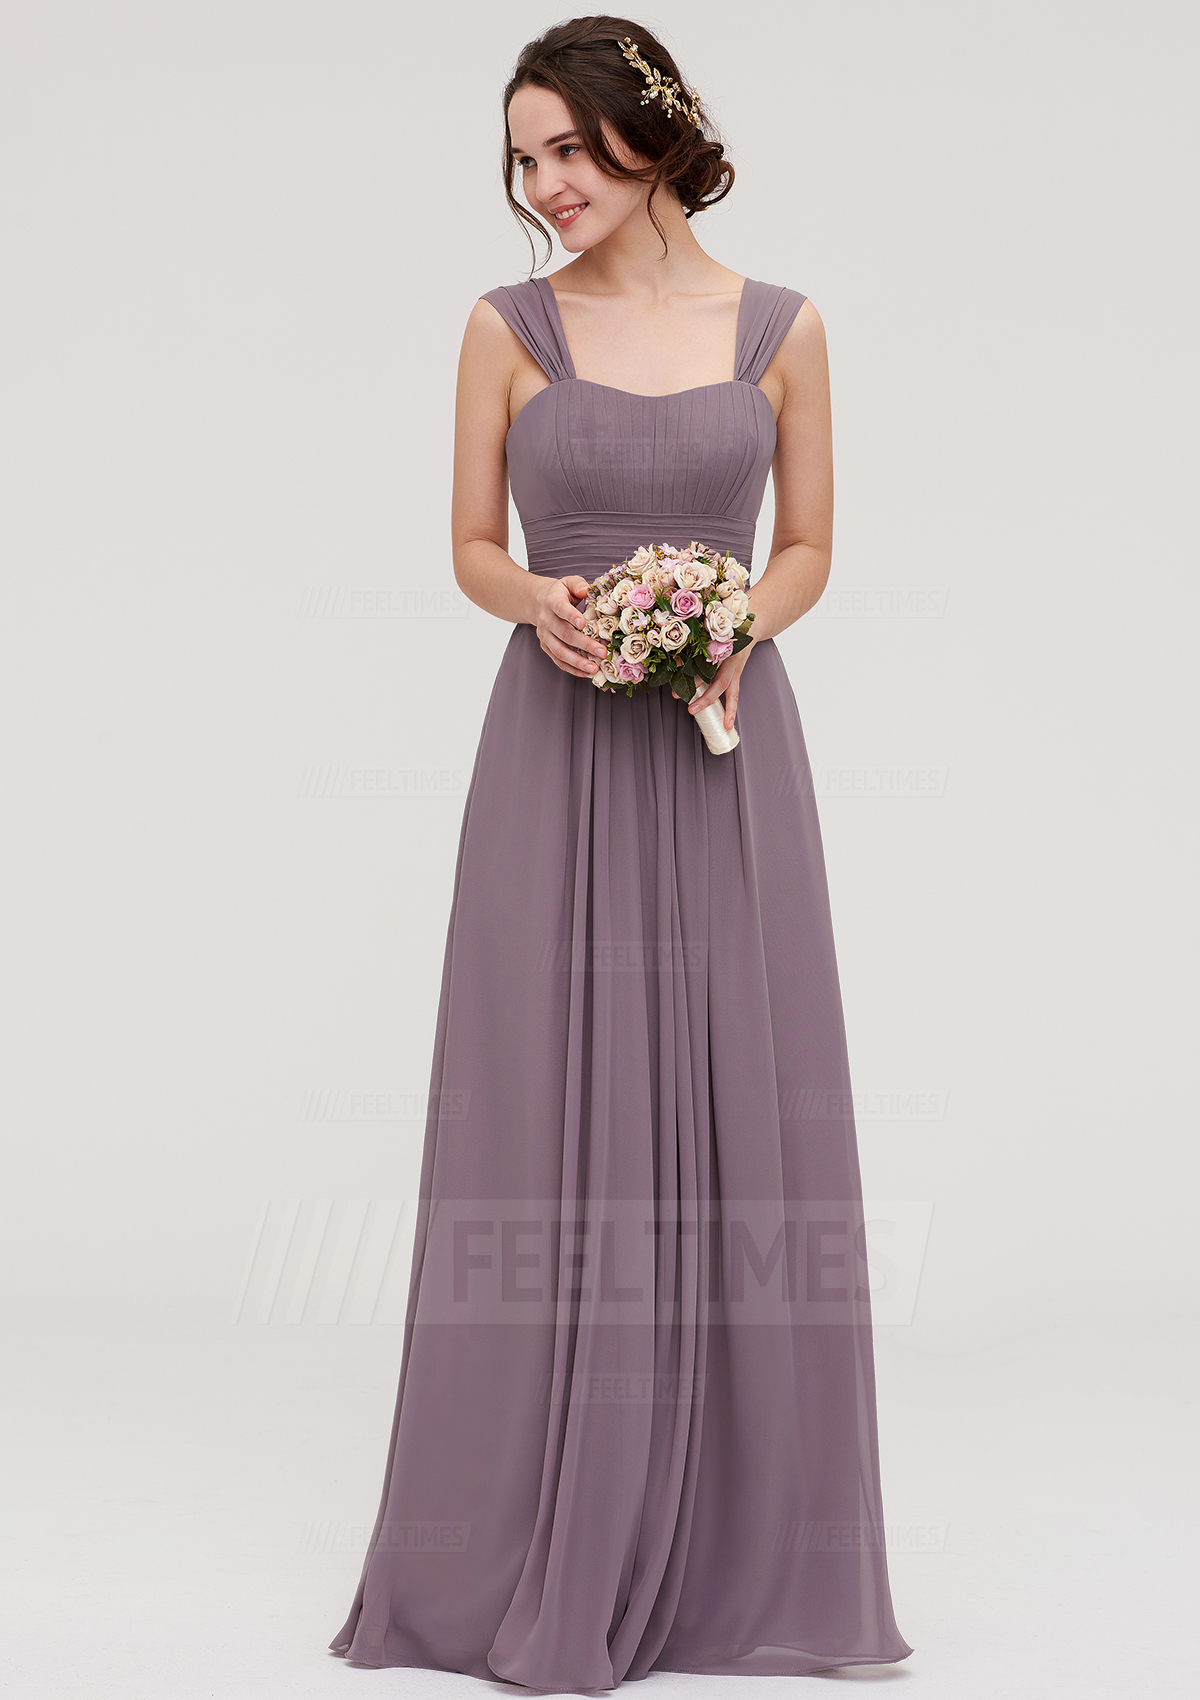 A-Line/Princess Square Neckline Sleeveless Long/Floor-Length Chiffon Bridesmaid Dresses With Pleated
